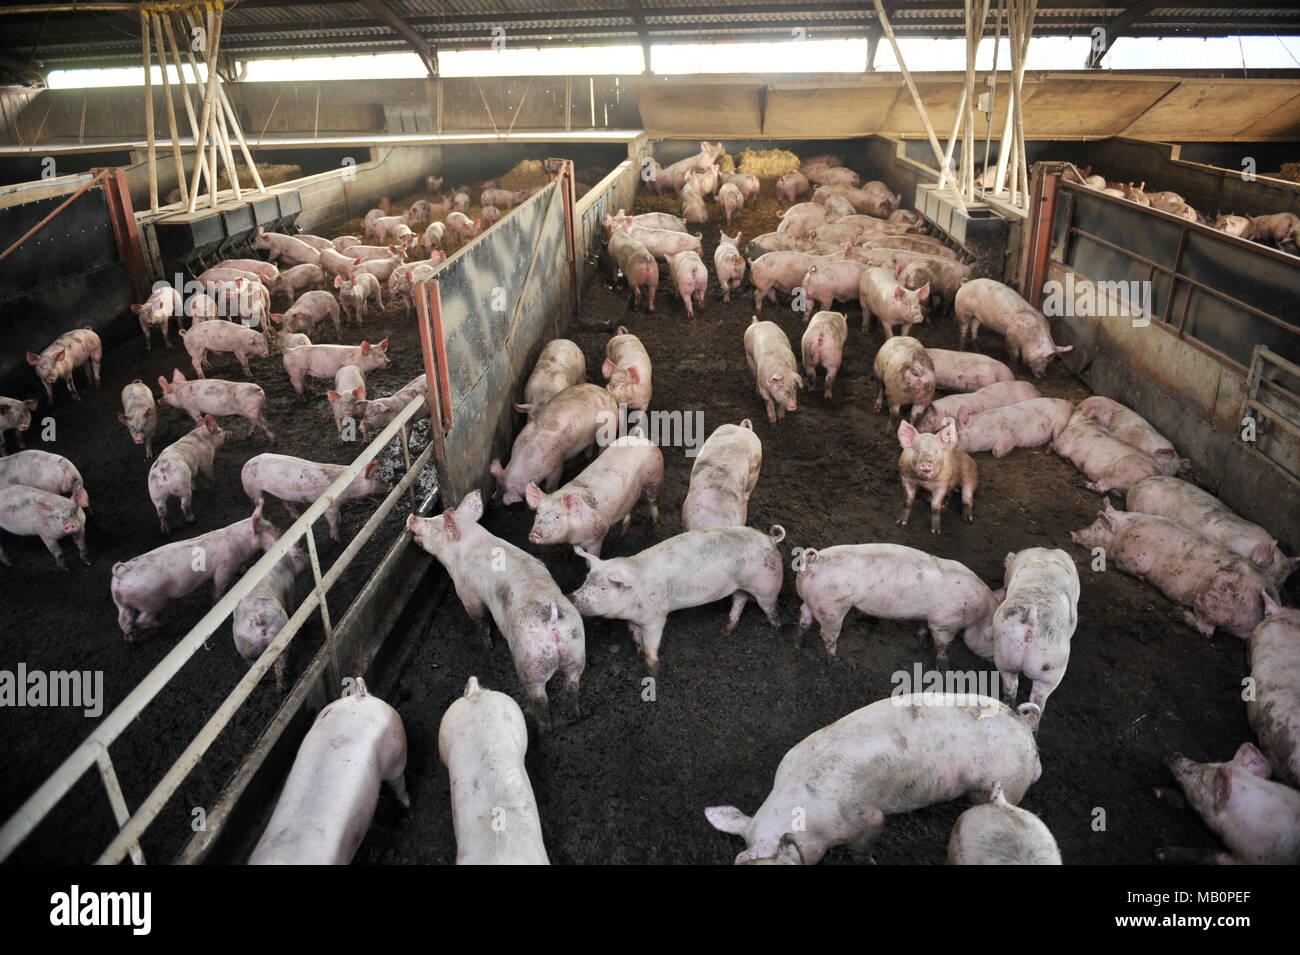 indoor pig farm Stock Photo